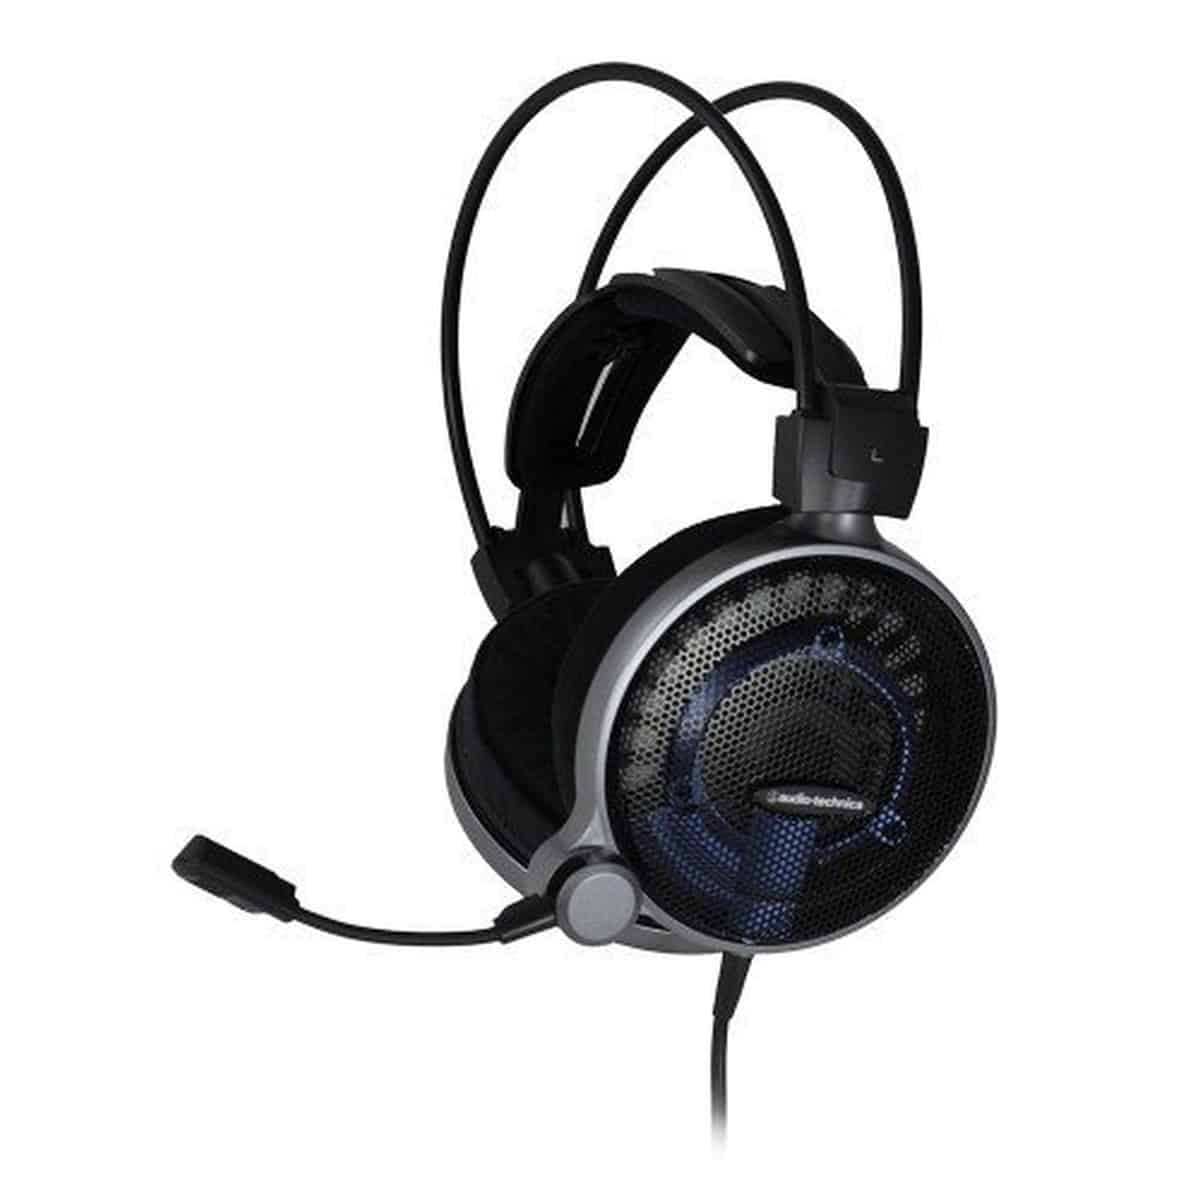 Audio-Technica ATH-ADG1X | Best Gaming Headset On Amazon